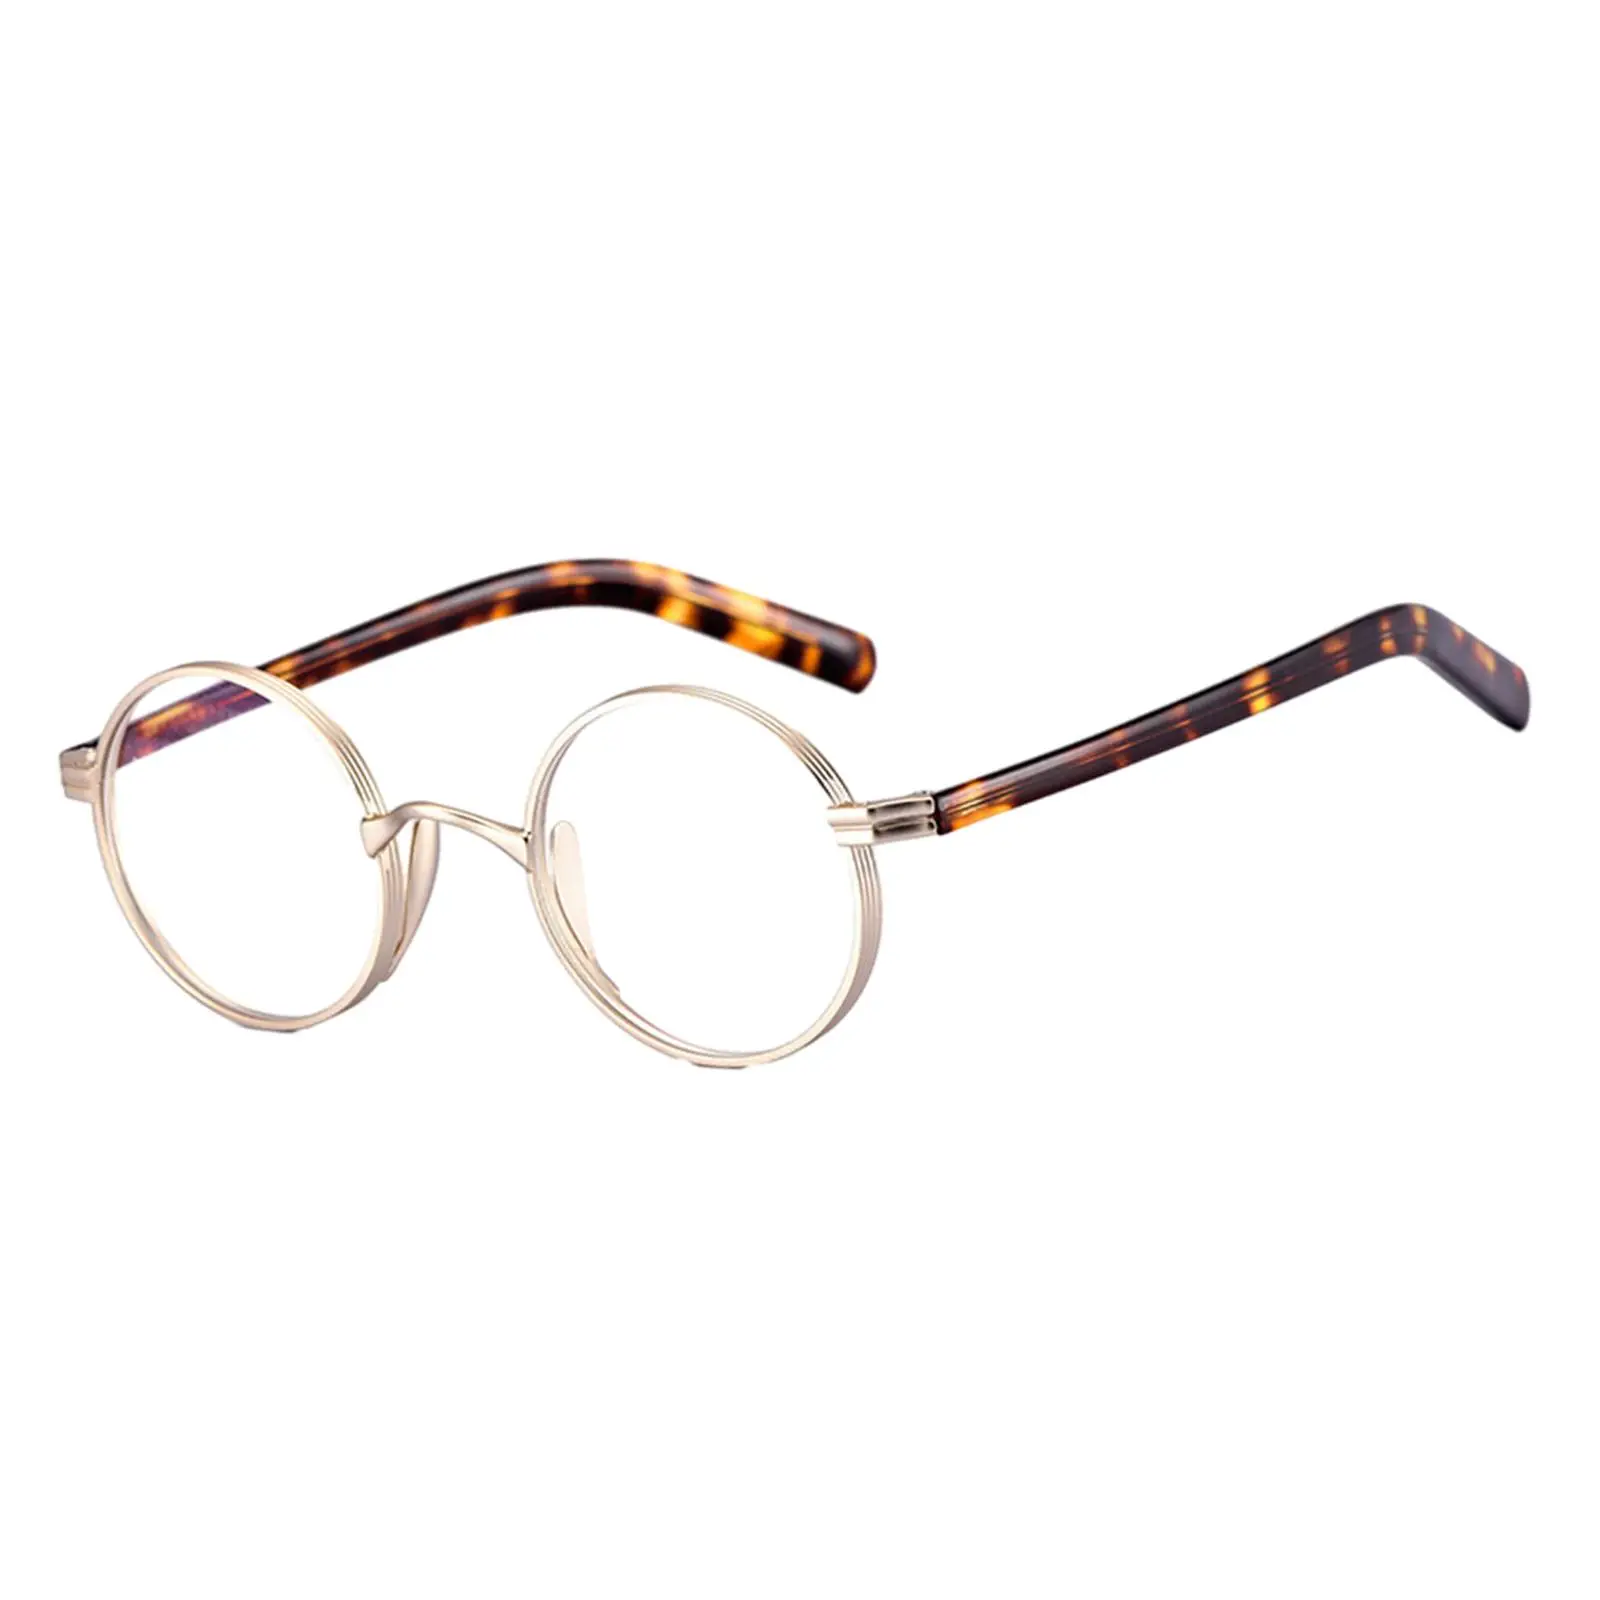 Glasses Frames for Women Men Classic Comfortable to Wear Oval Titanium Alloy Eyewear Frames Eyeglasses Frames Eyeglass Frame